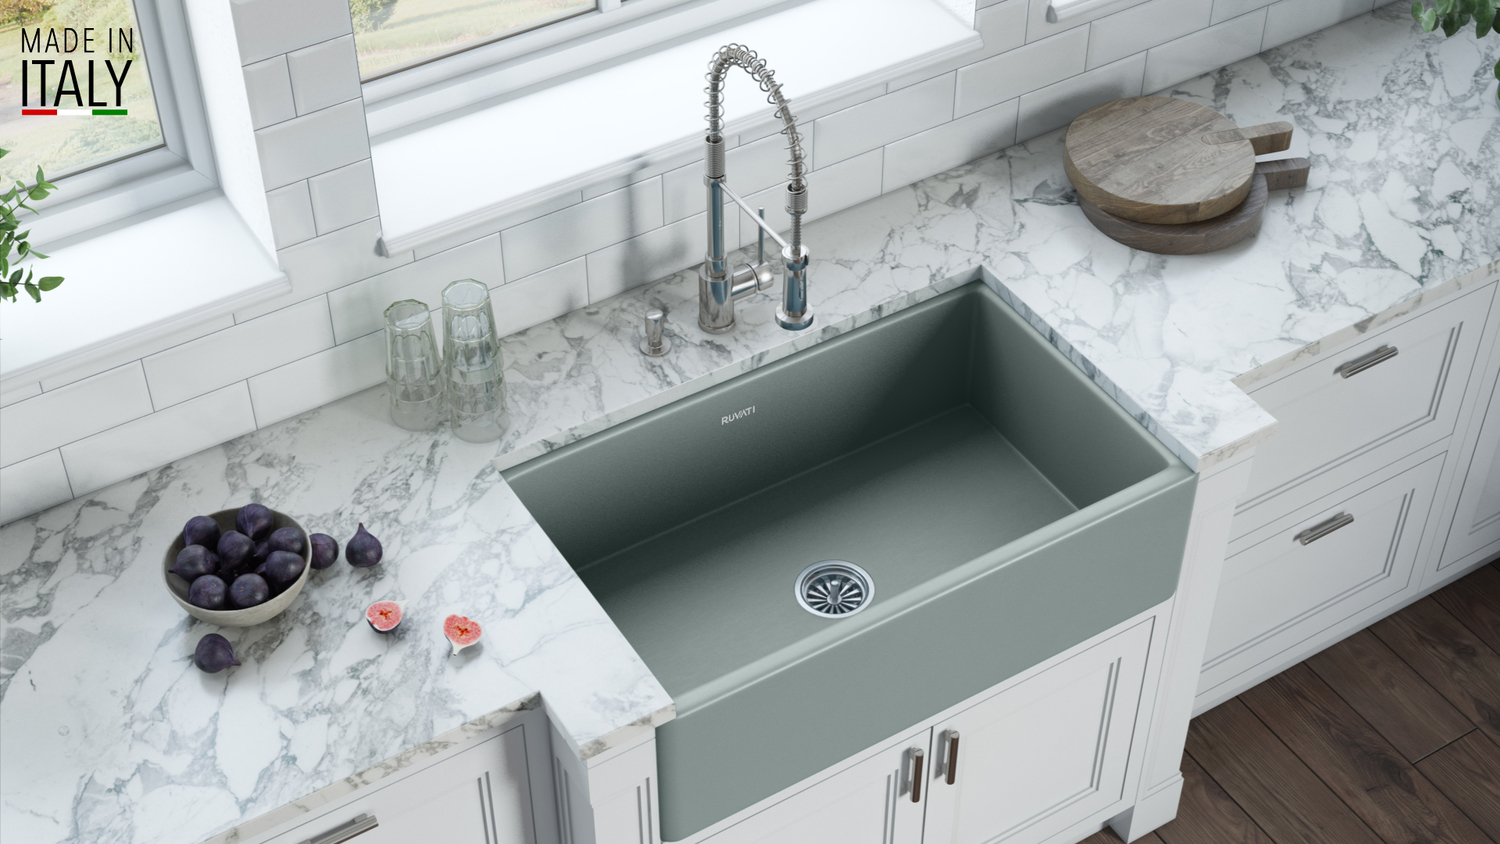  Ruvati Kitchen Sink Single Bowl Sinks Horizon Gray